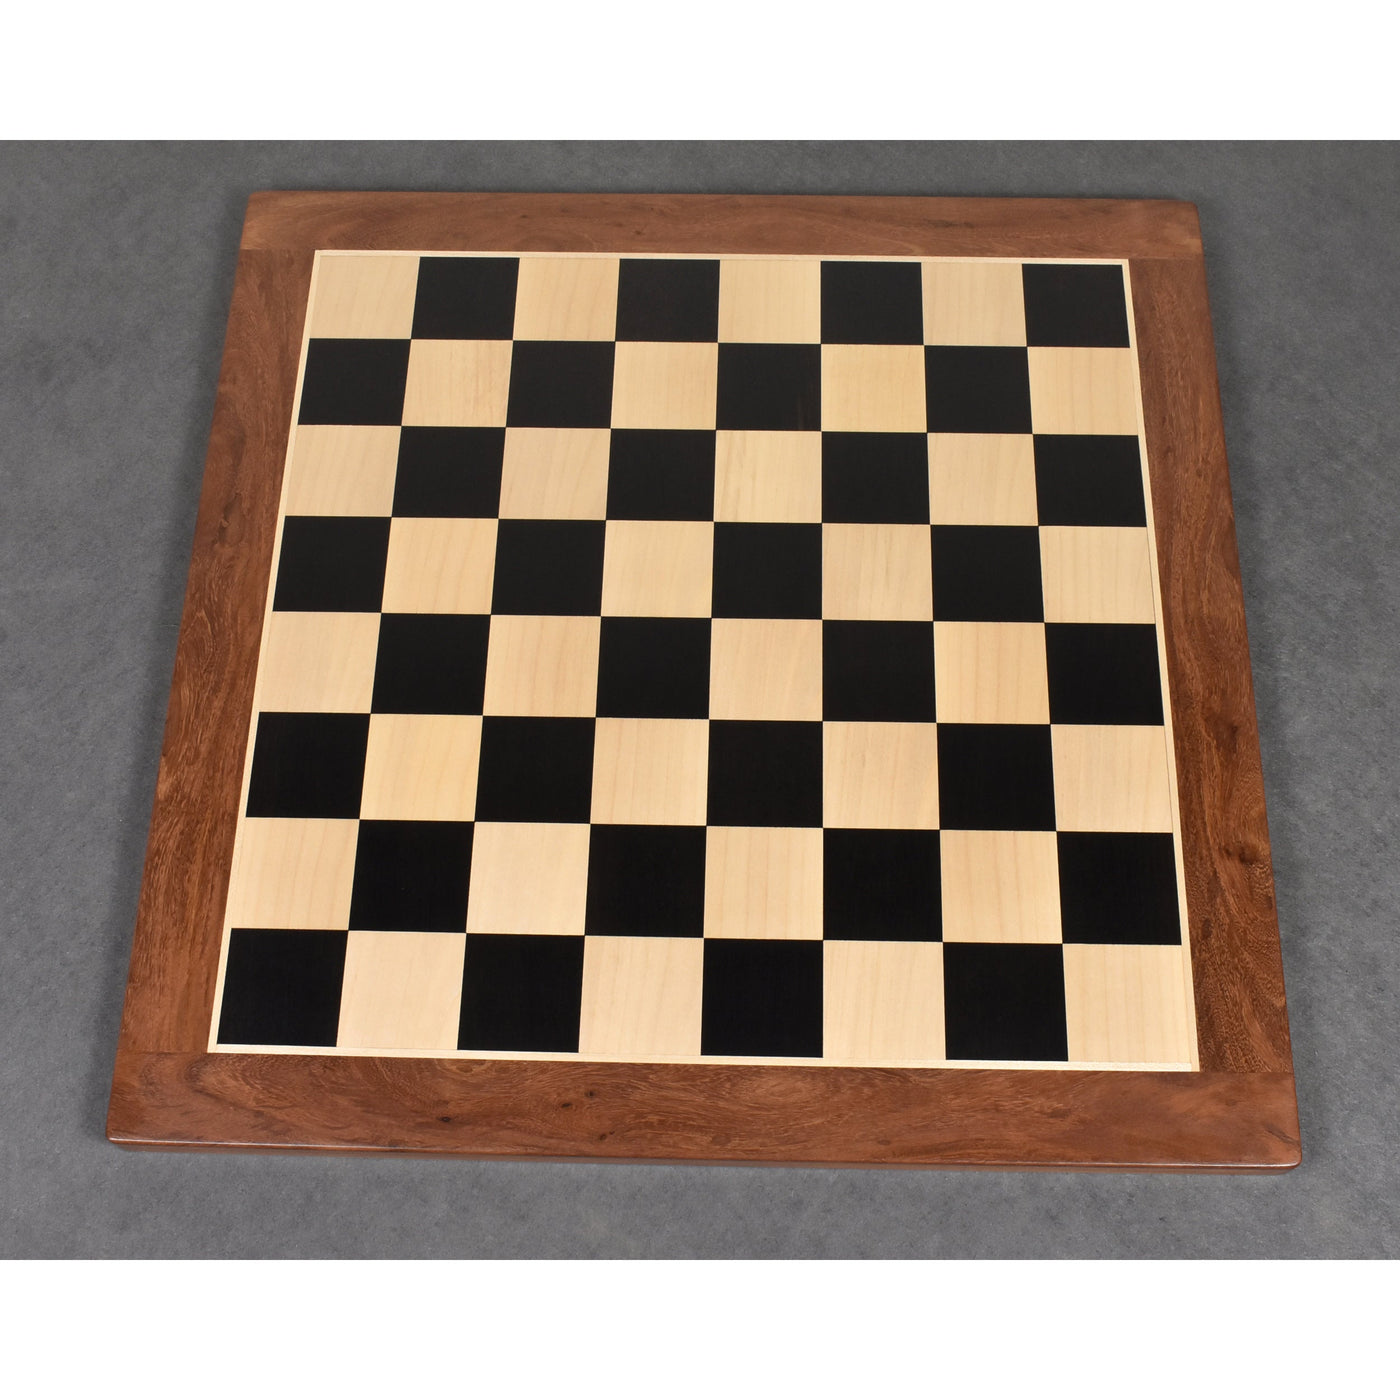 Combo of 4.6" Prestige Luxury Staunton Ebony Chess Pieces with 23" Large Ebony & Maple Wood Chessboard and Storage Box